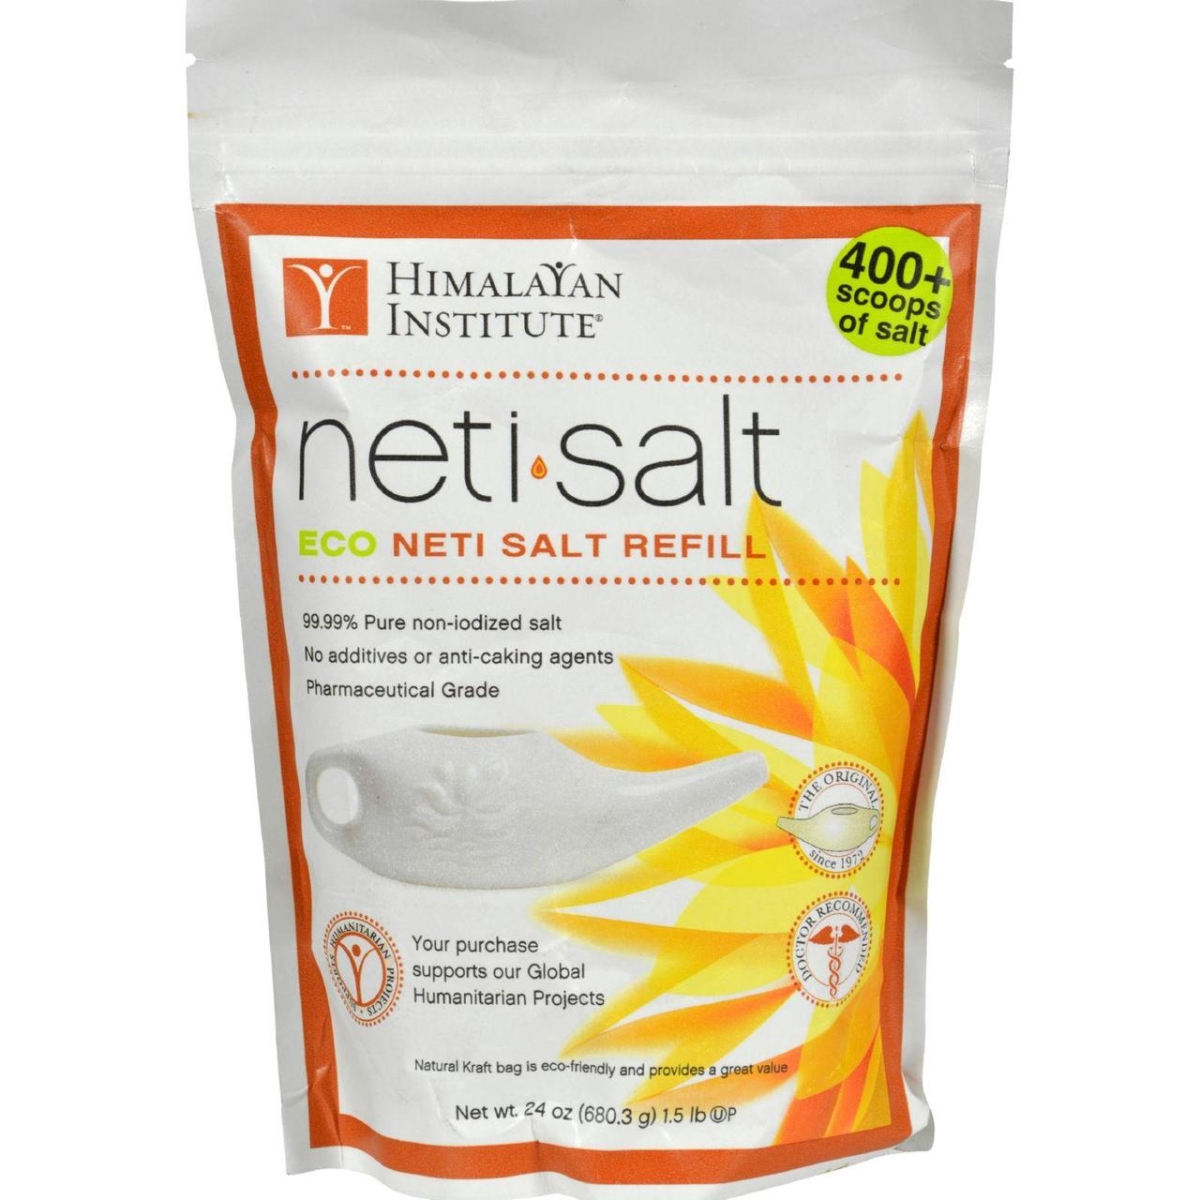 Hg0281063 1.5 Lbs Neti Pot Salt Bag